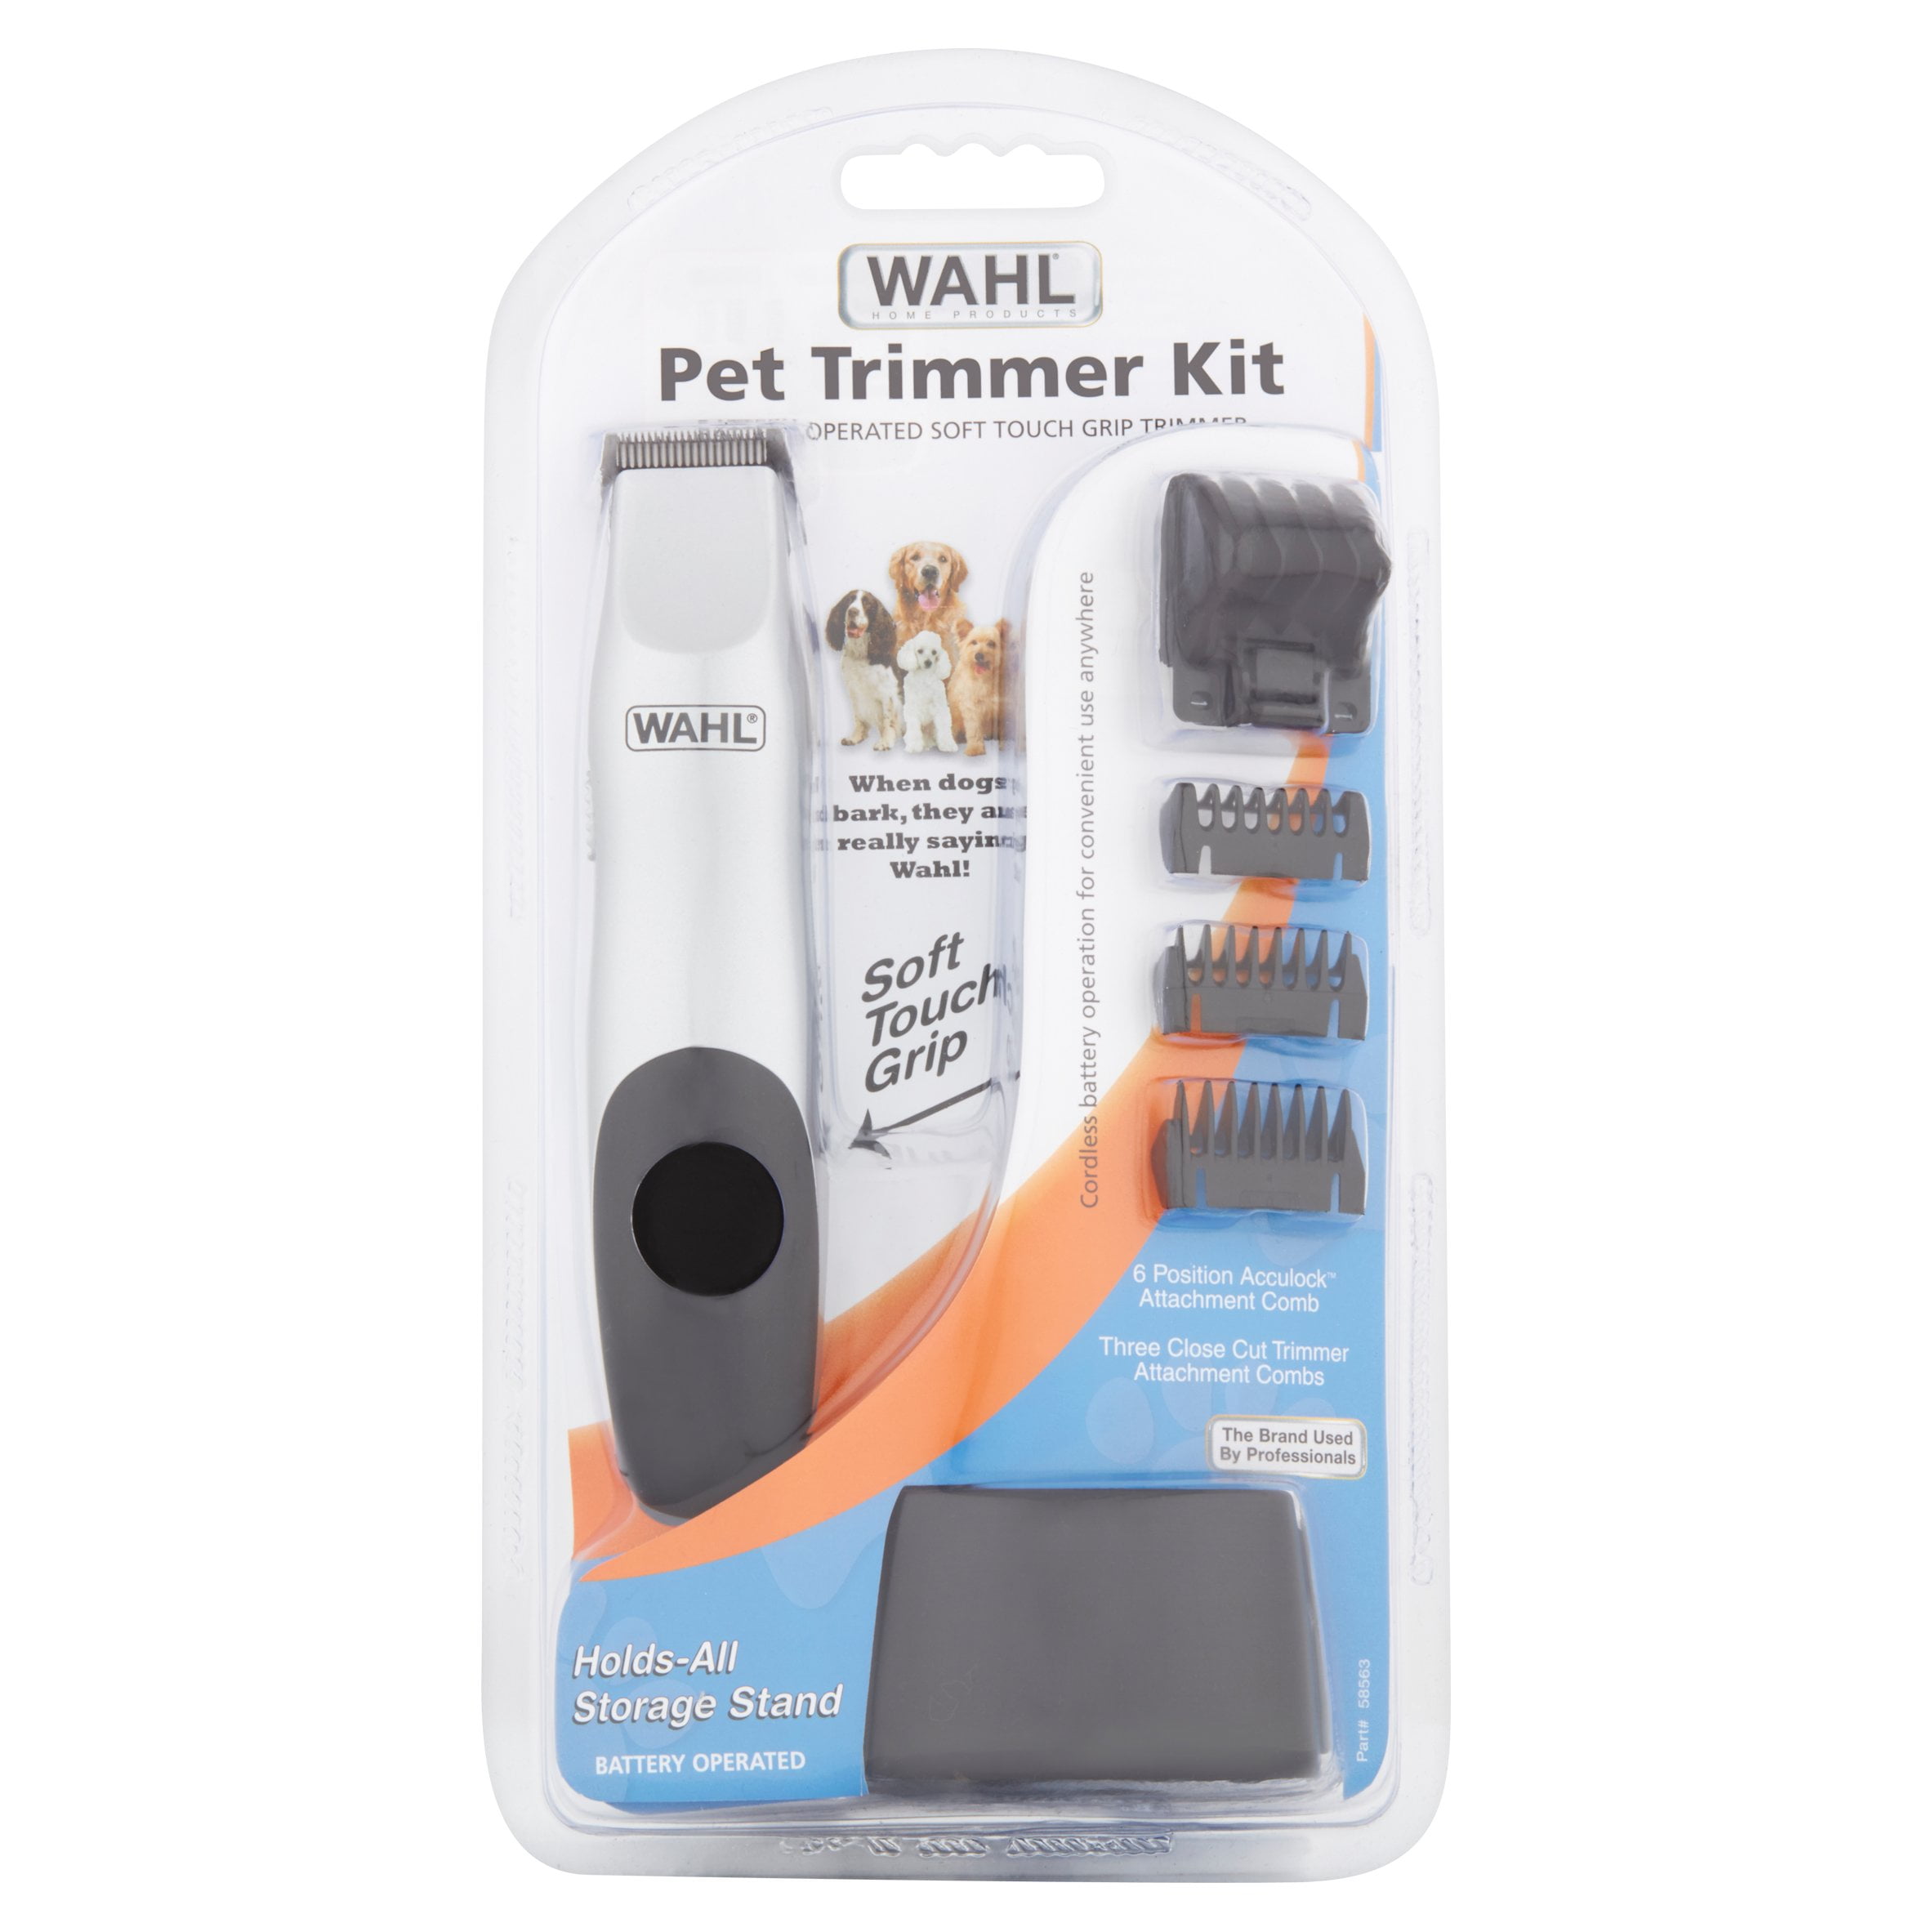 conair palm pro micro pet trimmer